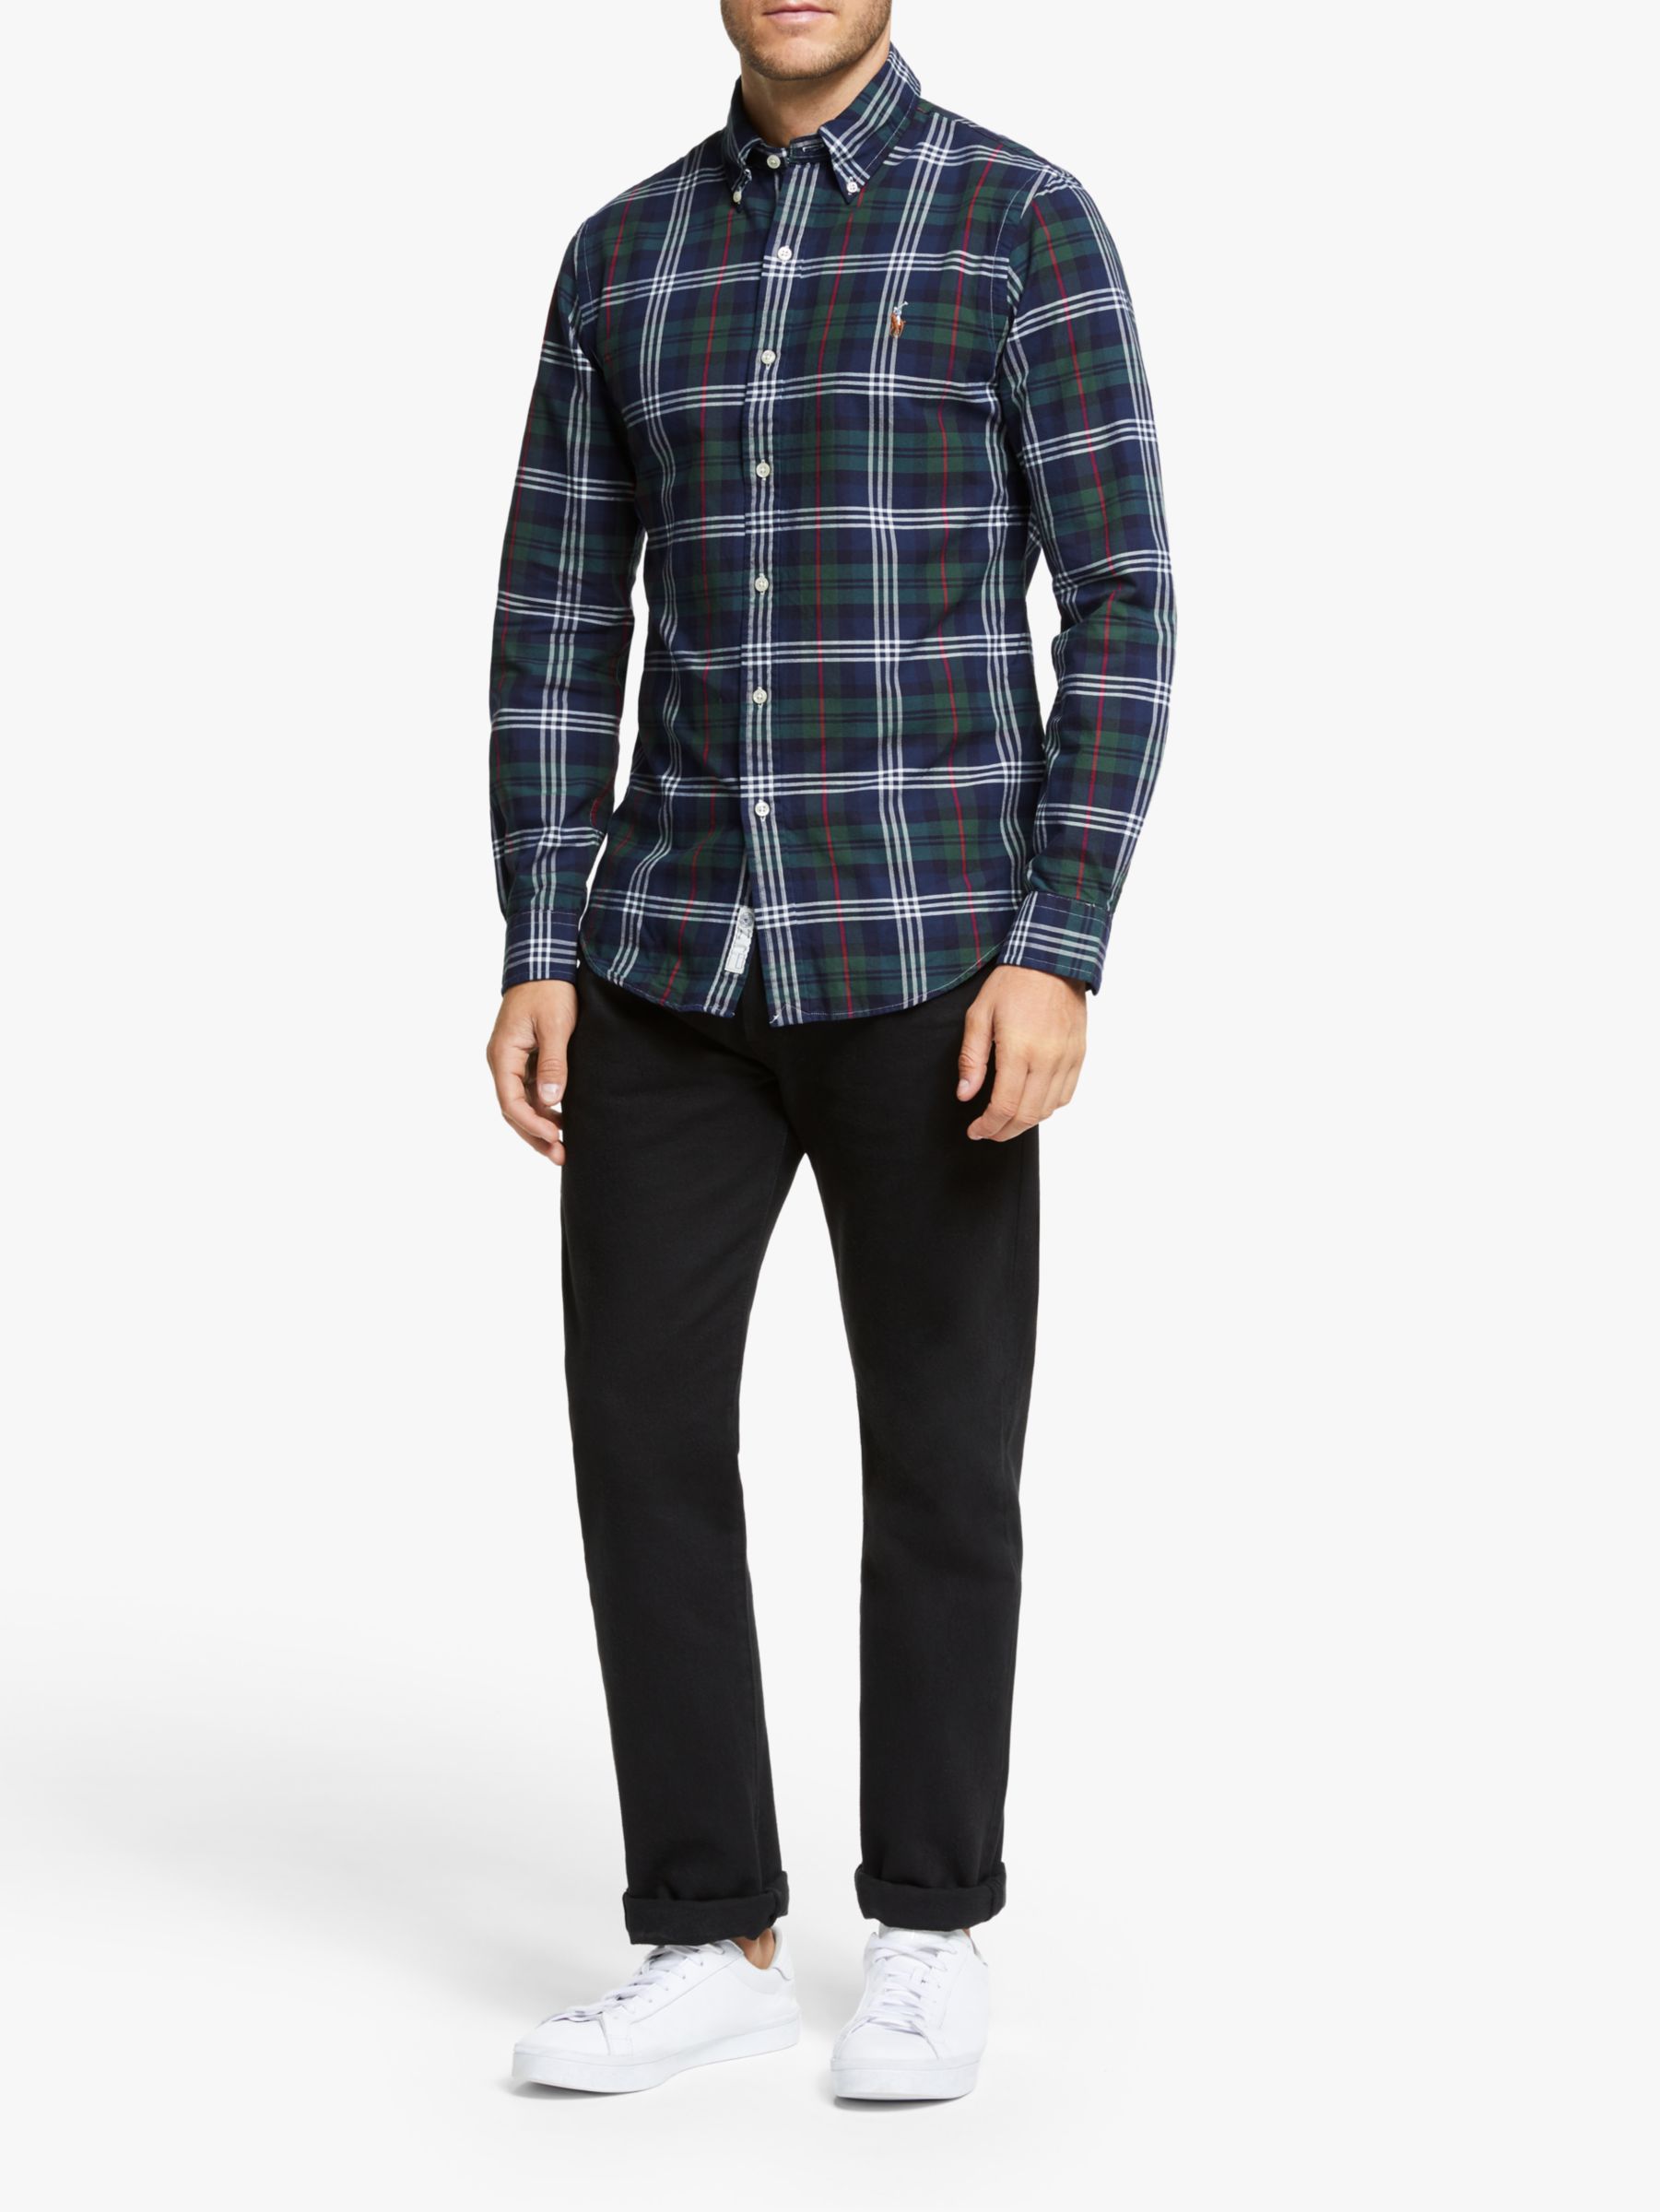 Polo Ralph Lauren Custom Fit Plaid Oxford Shirt, Hunter Green/Navy Multi, L